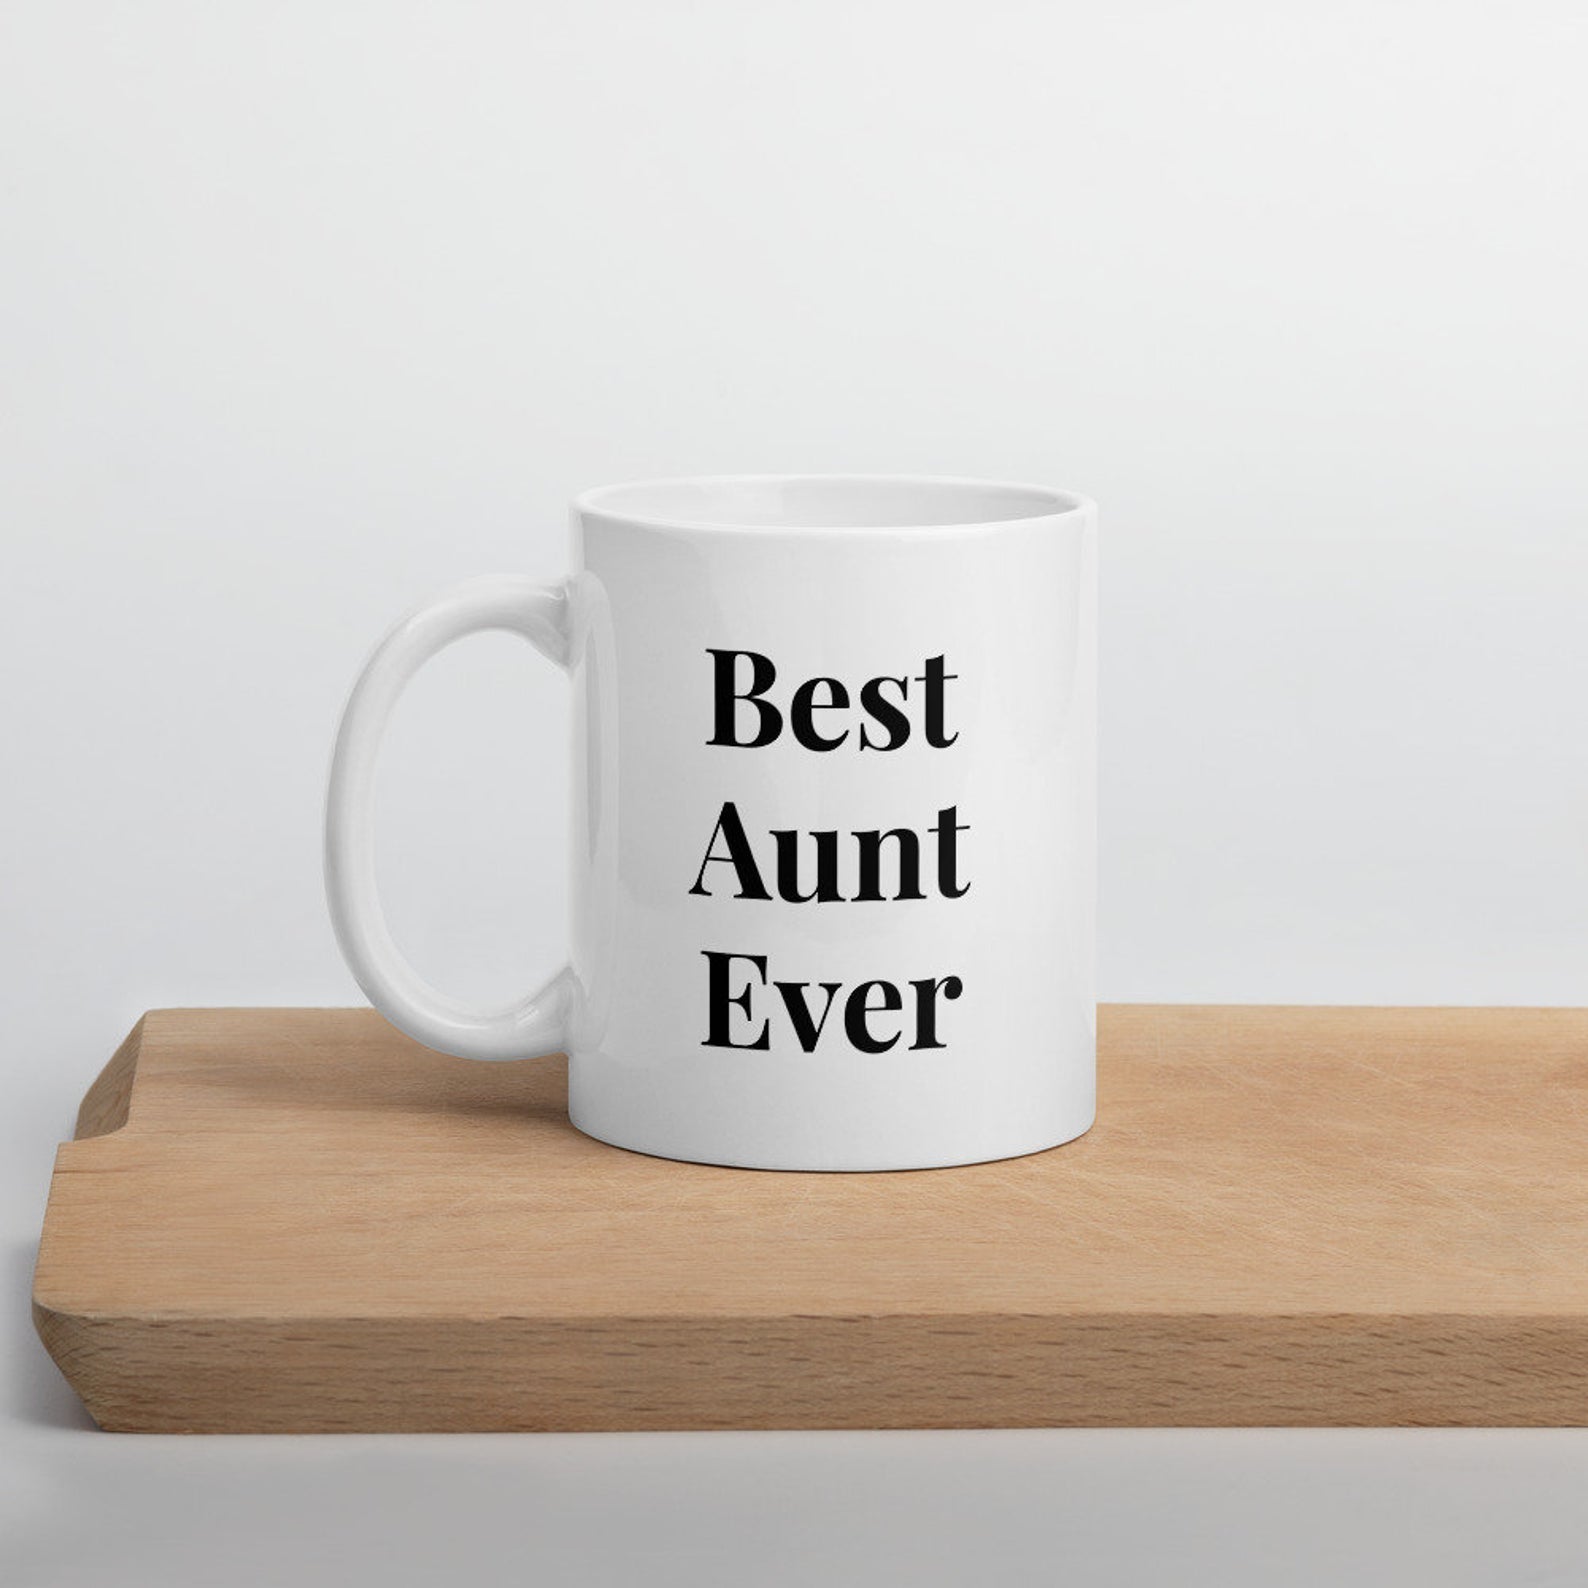 Best Aunt Ever Mug White Ceramic 11-15Oz Coffee Tea Cup